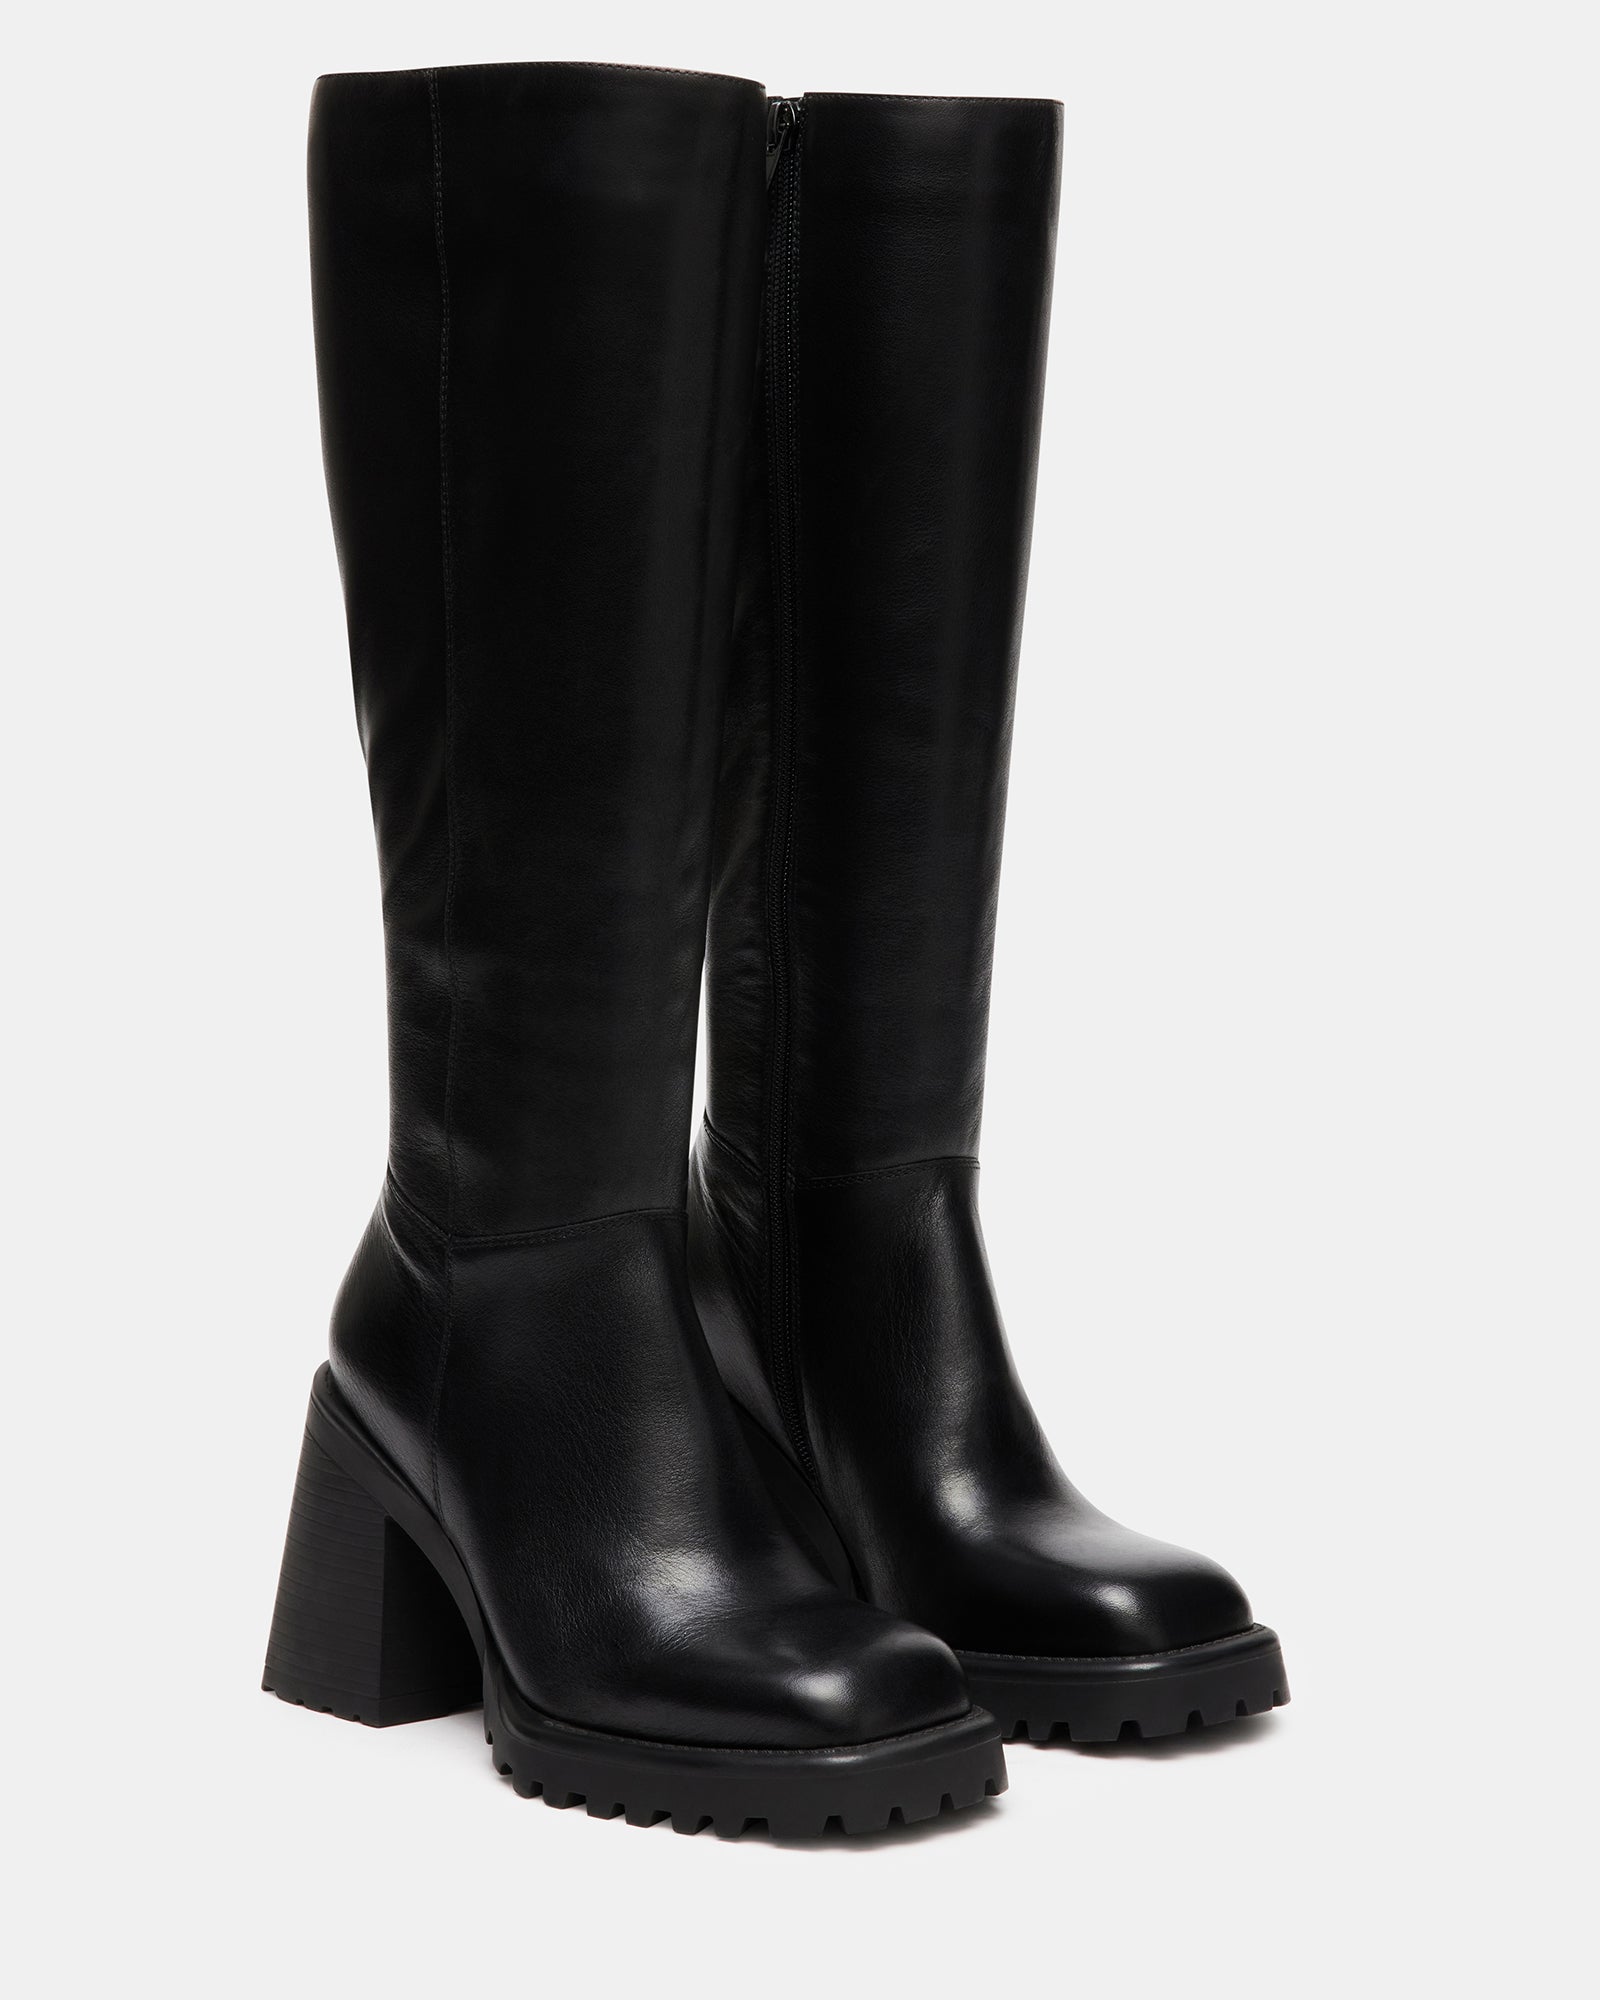 VIOLET Black Leather Knee High Block Heel Boot | Women's Boots – Steve ...